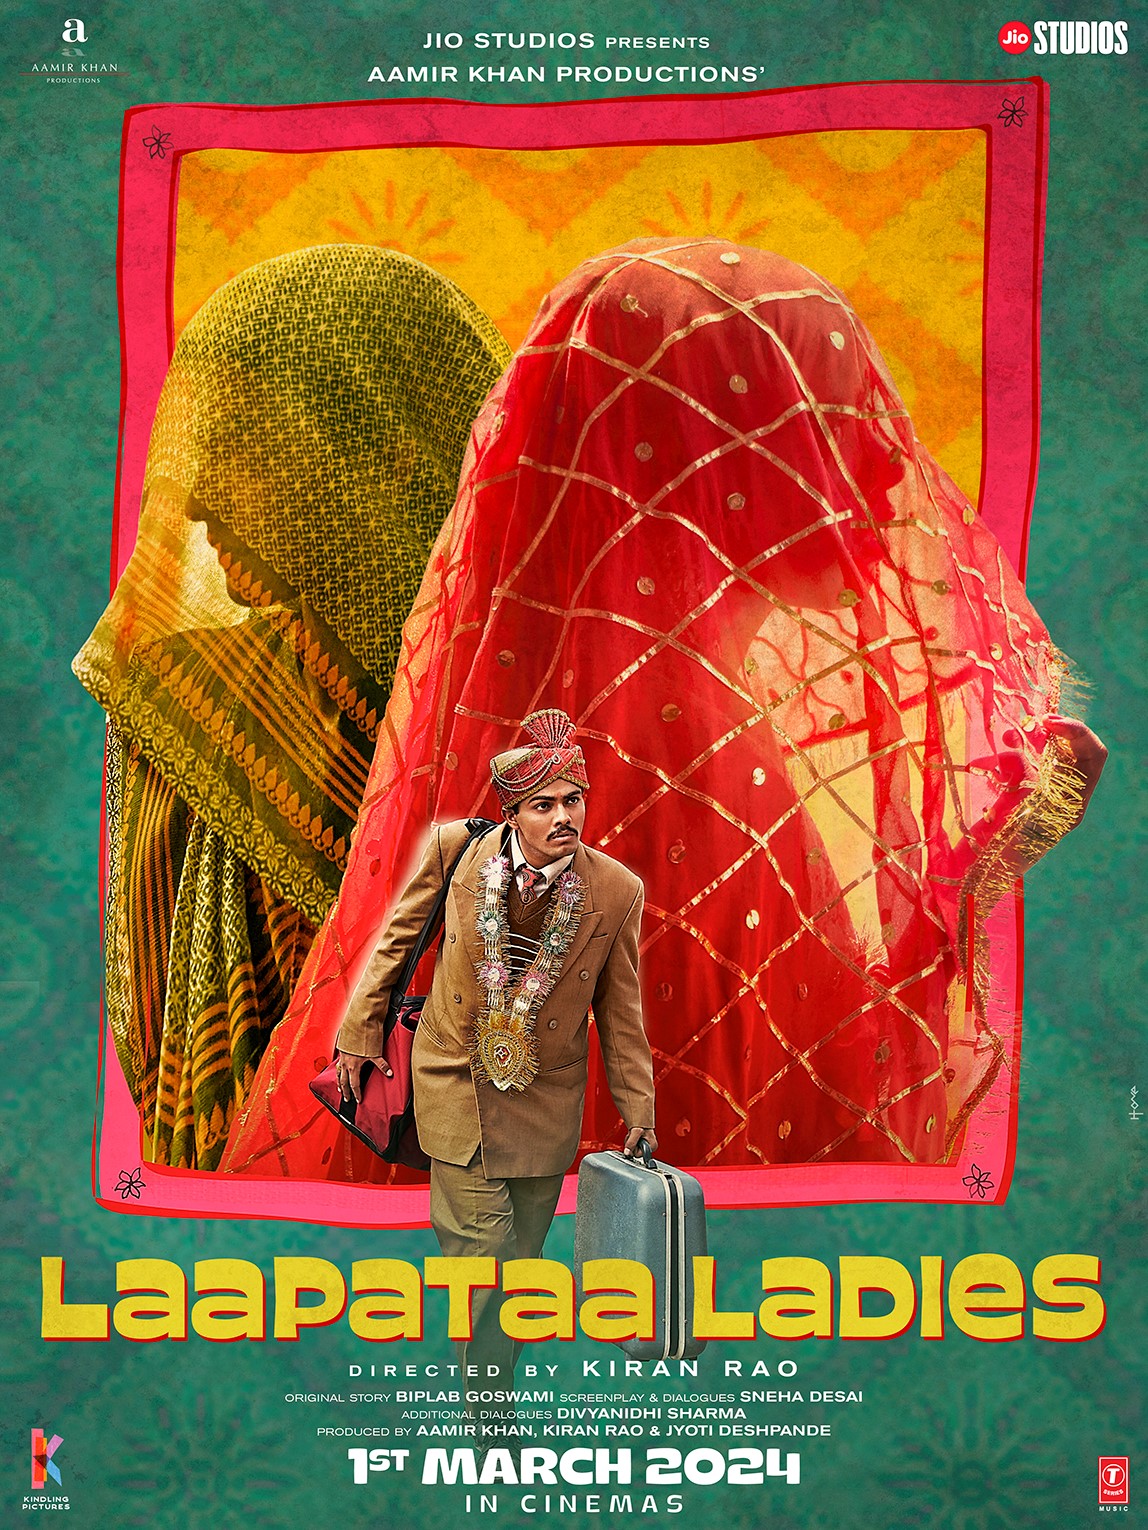 Laapataa Ladies Movie Review - The Celeb Guru